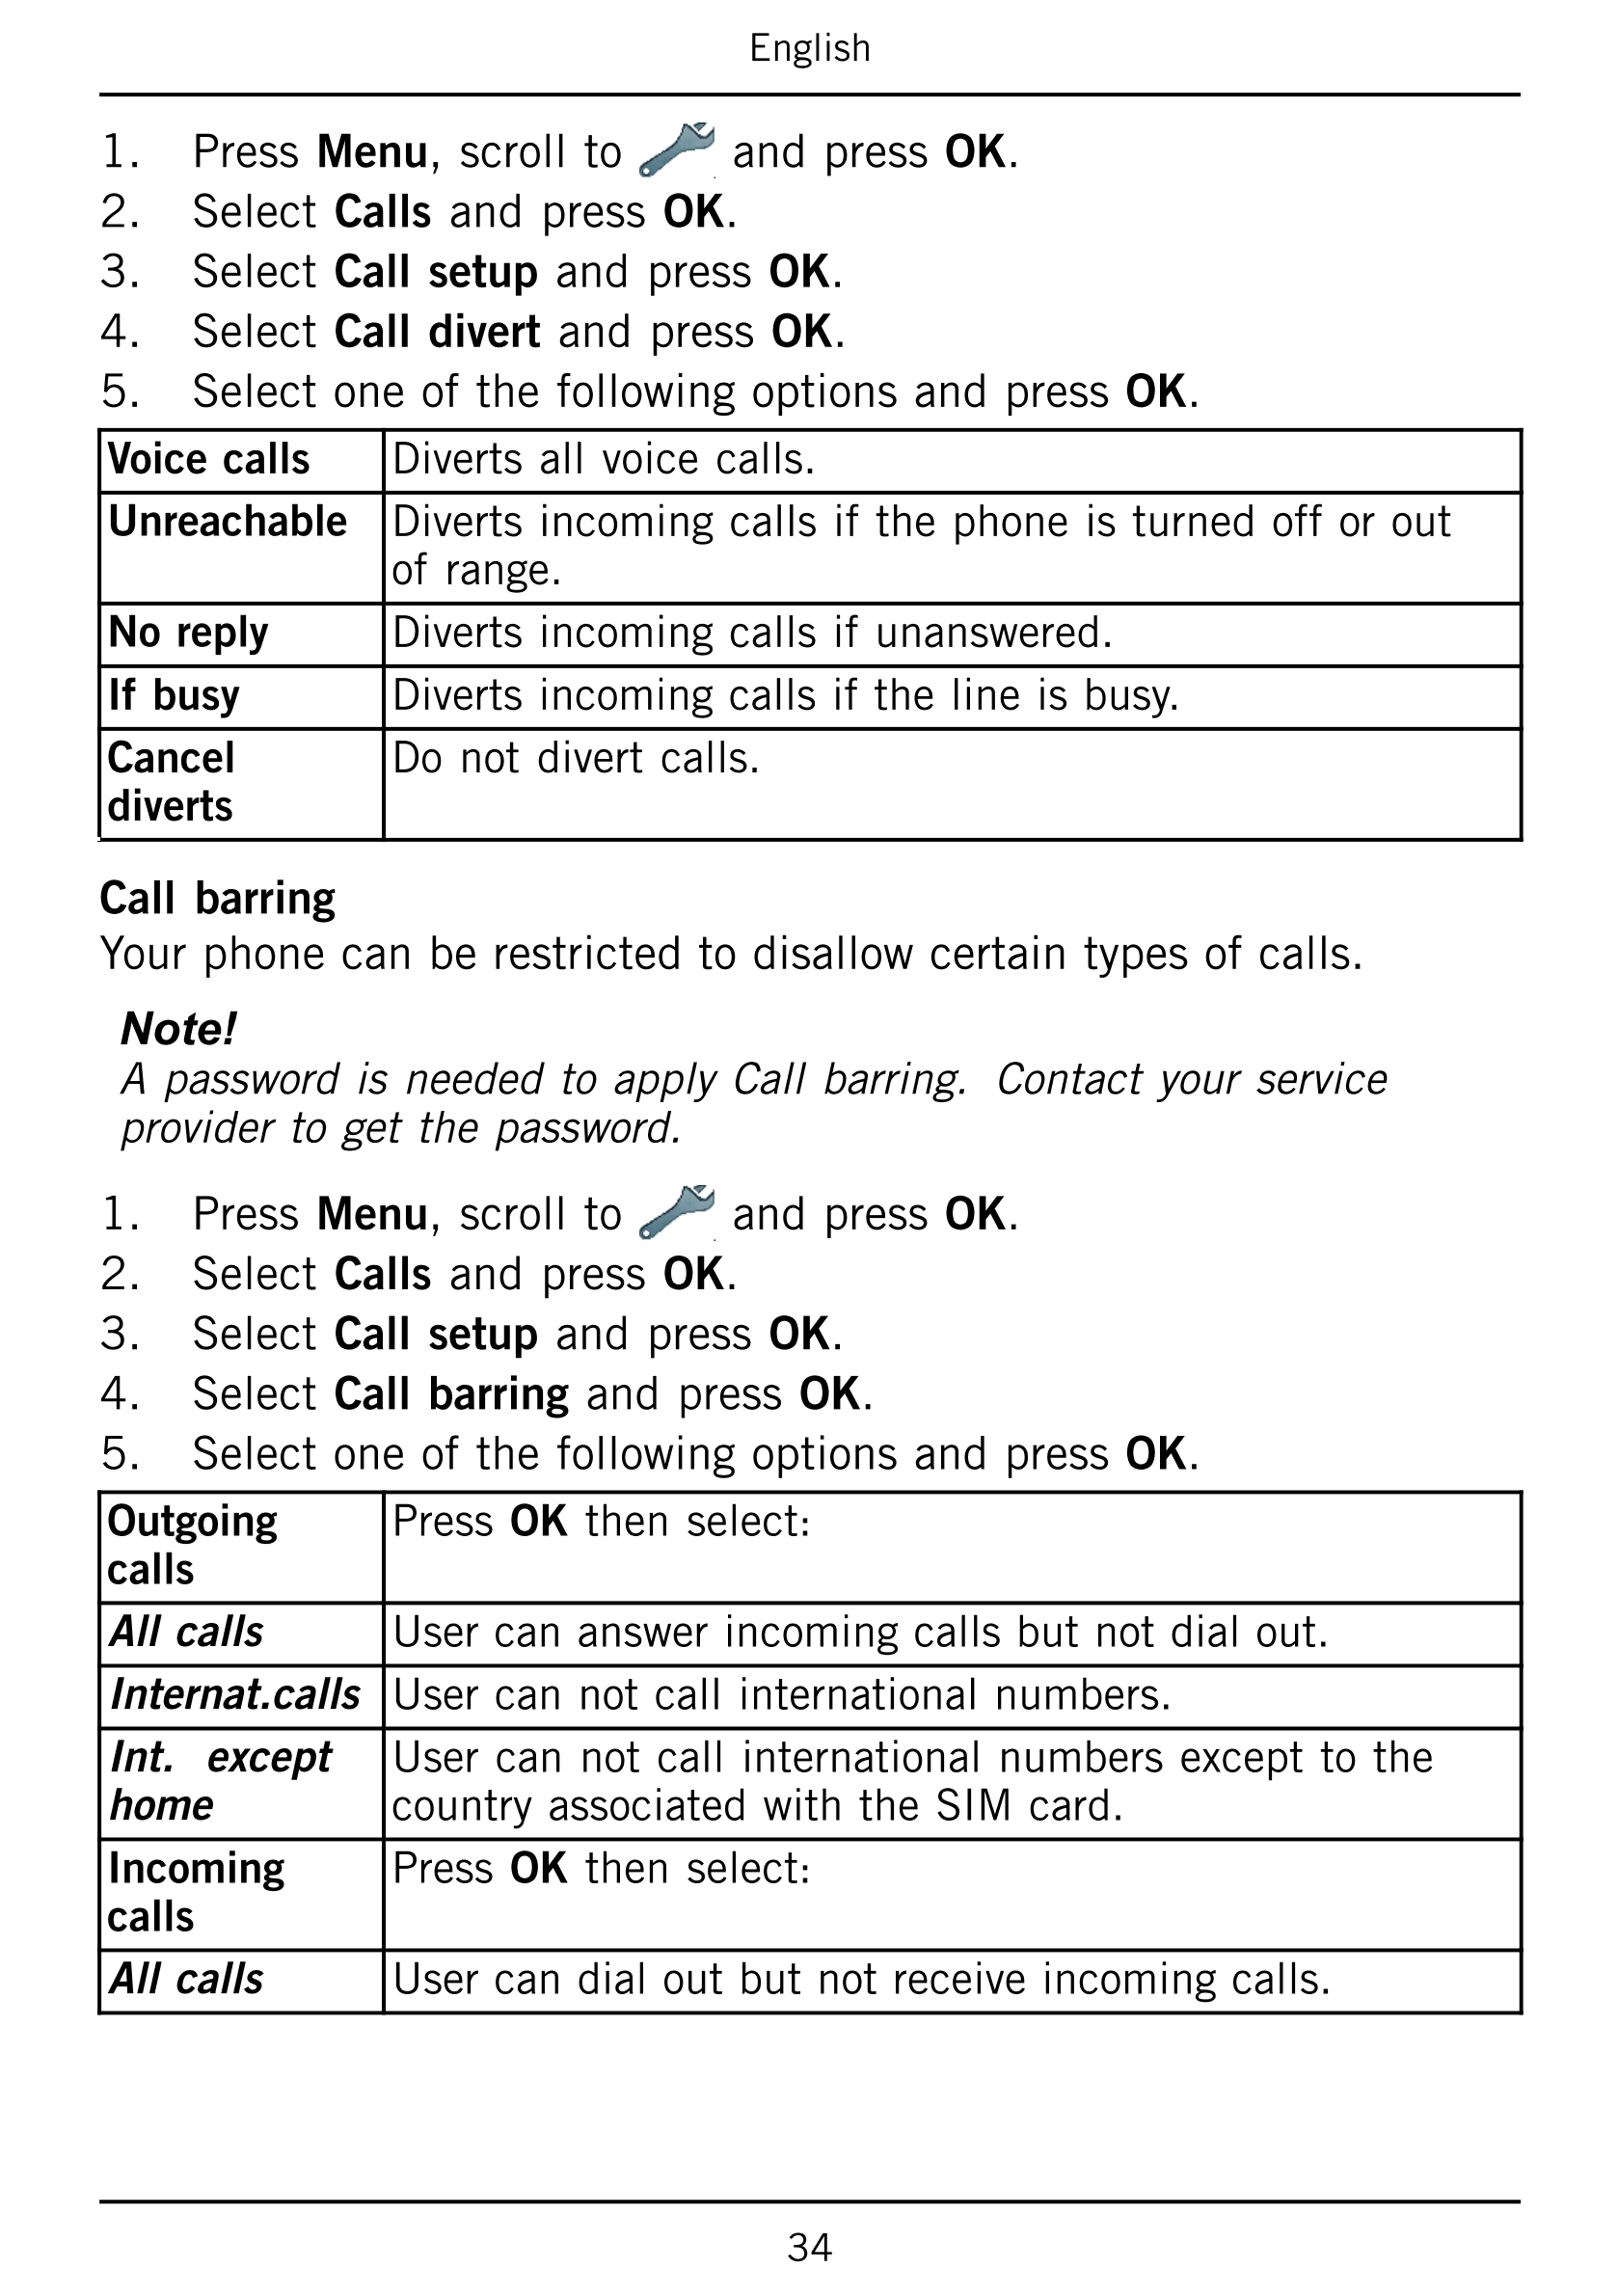 English
1.     Press Menu, scroll to and press OK.
2.     Select Calls and press OK.
3.     Select Call setup and press OK.
4.  